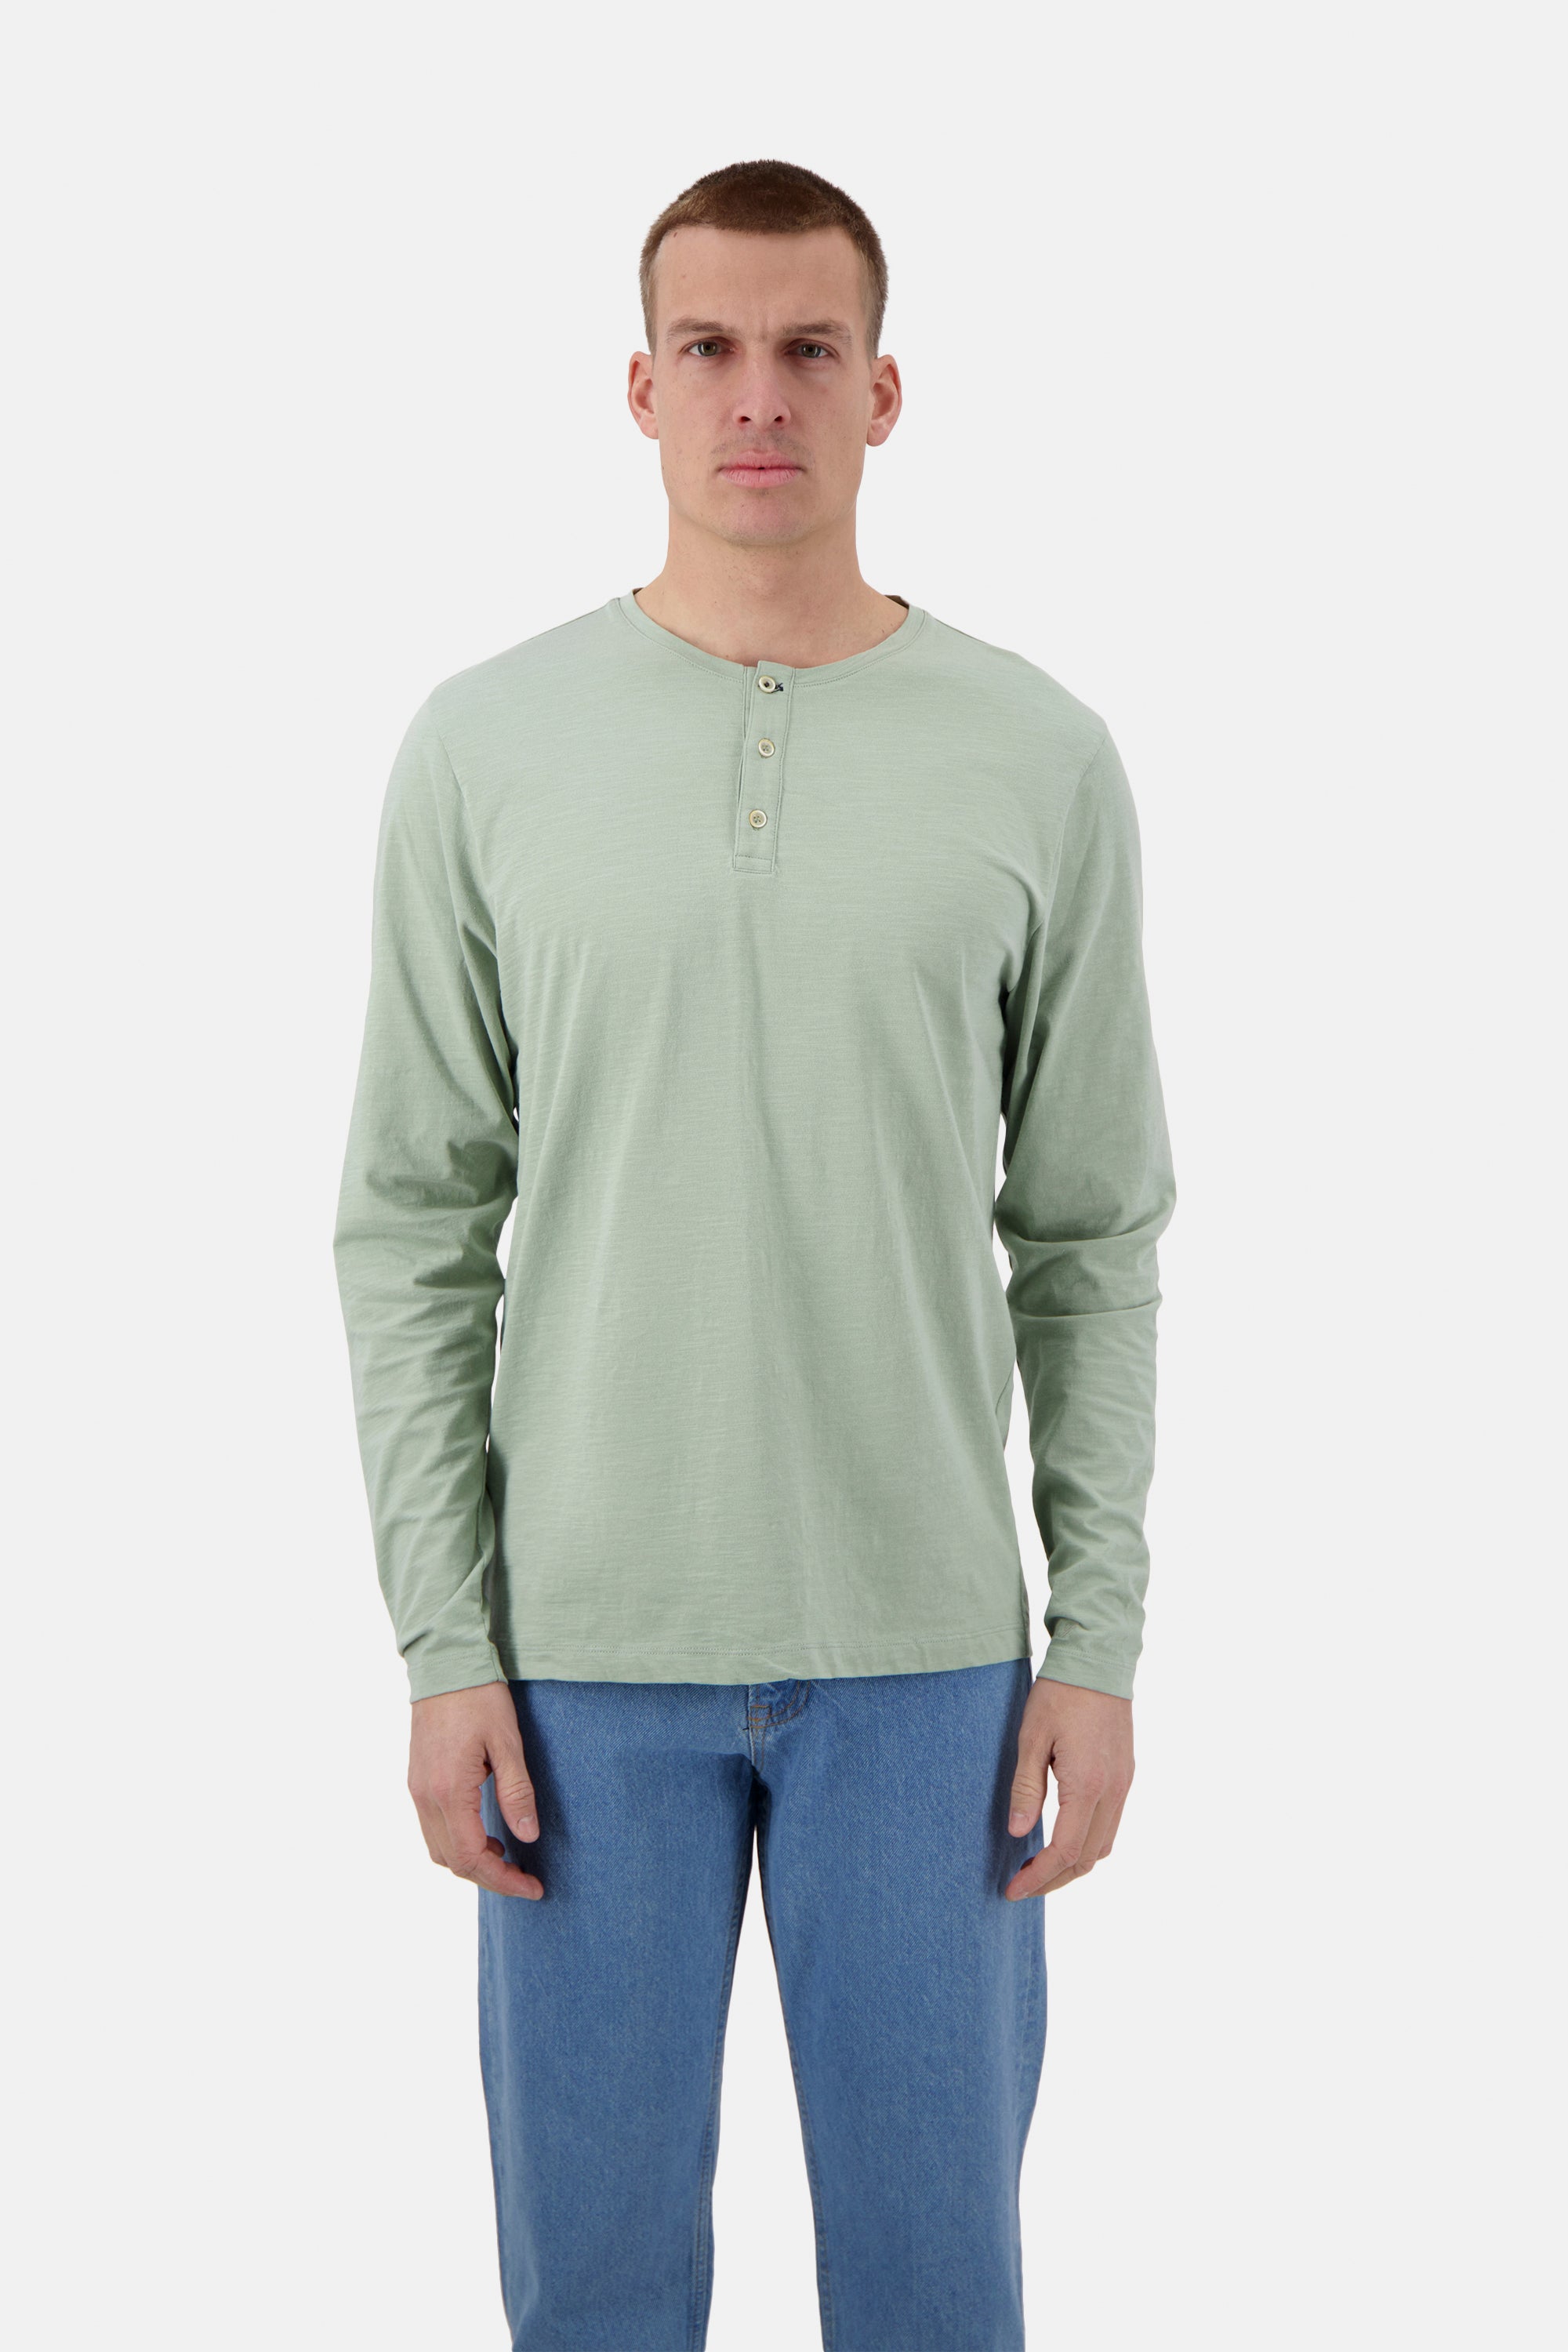 Herren Longsleeve Shirt, hellgrün, 100% Baumwolle von Colours & Sons